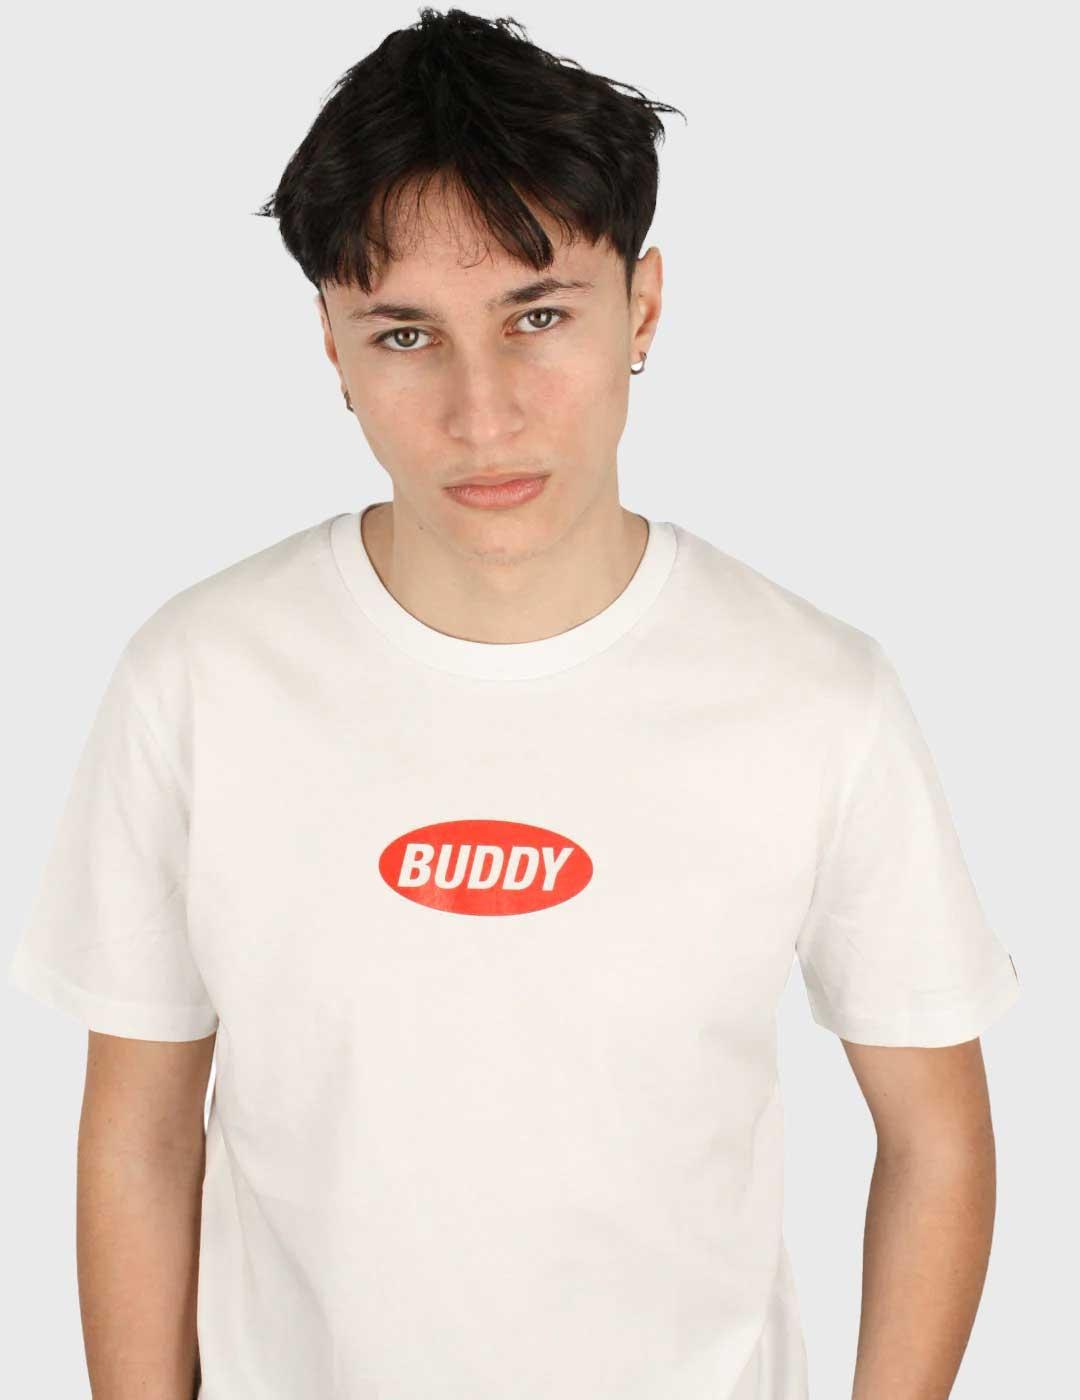 Buddy Eco Friendly Camiseta blanca para hombre